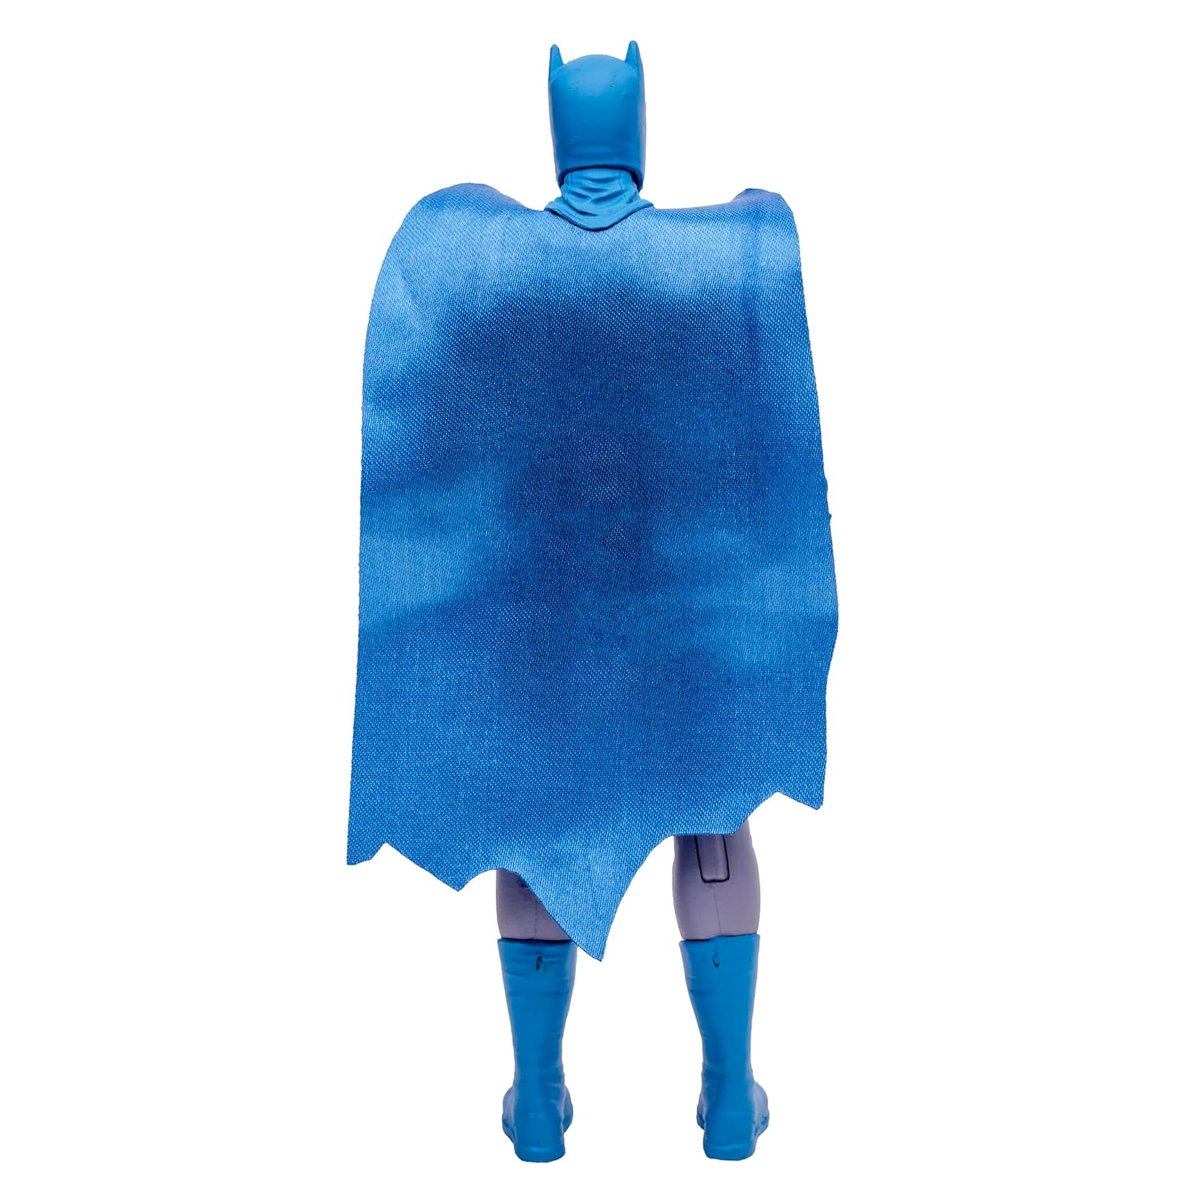 DC Retro The New Adventures of Batman - McFarlane Toys

Link para compra BR: *Possível importar pelo Link abaixo

Buy here: amzn.to/3vkDudJ

#dc #comics #McFarlane #actionfigure #dcmultiverse #dcretro #animatedseries #batman #TheNewAdventuresofBatman #brucewayne